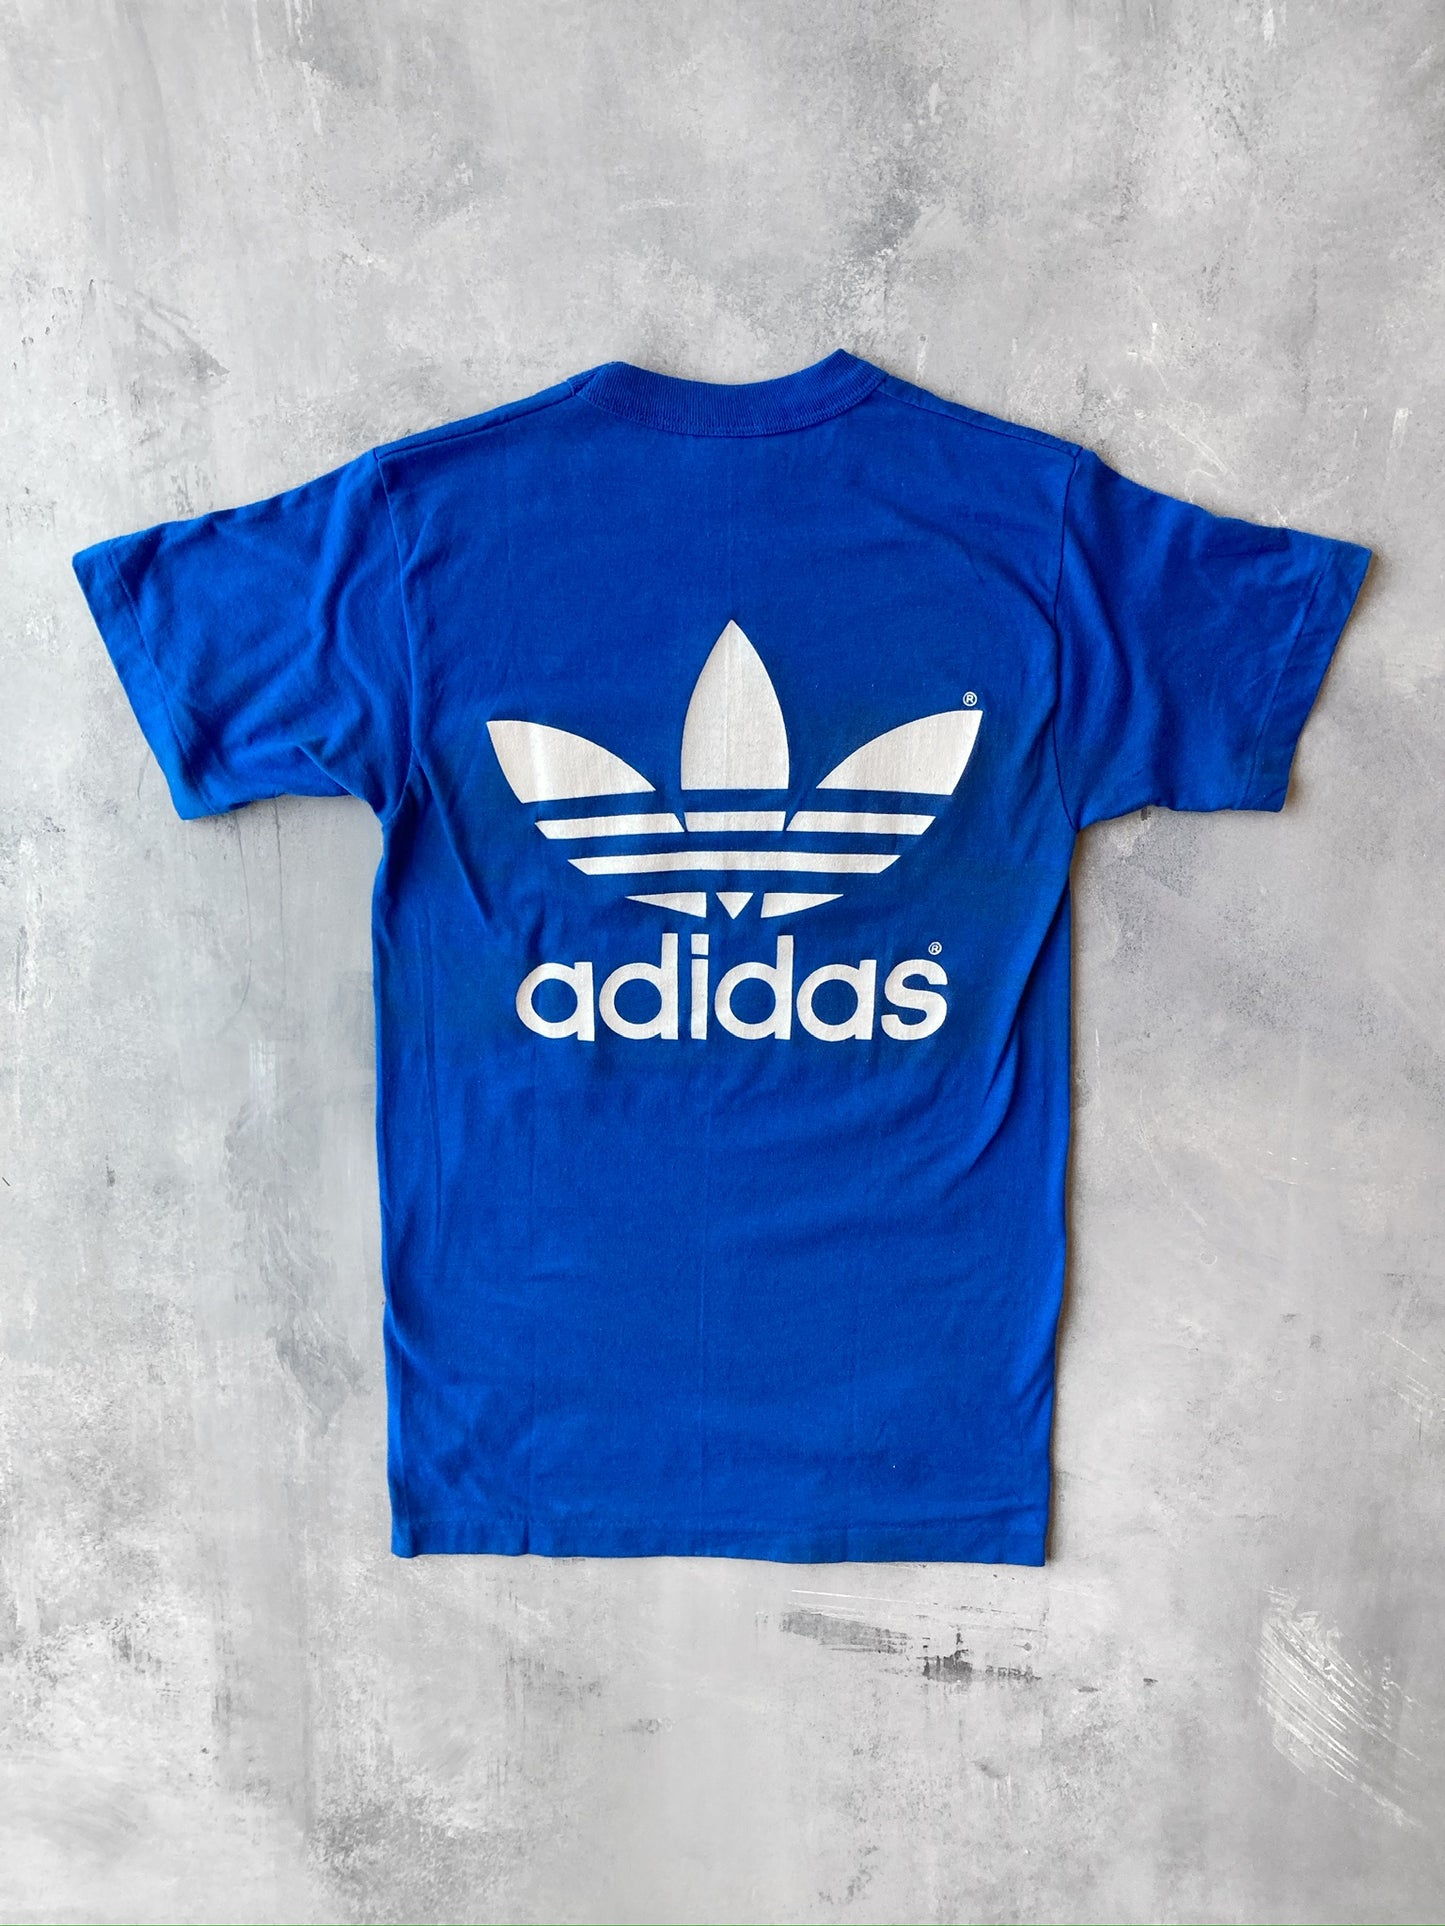 Adidas T-Shirt 80's - XS